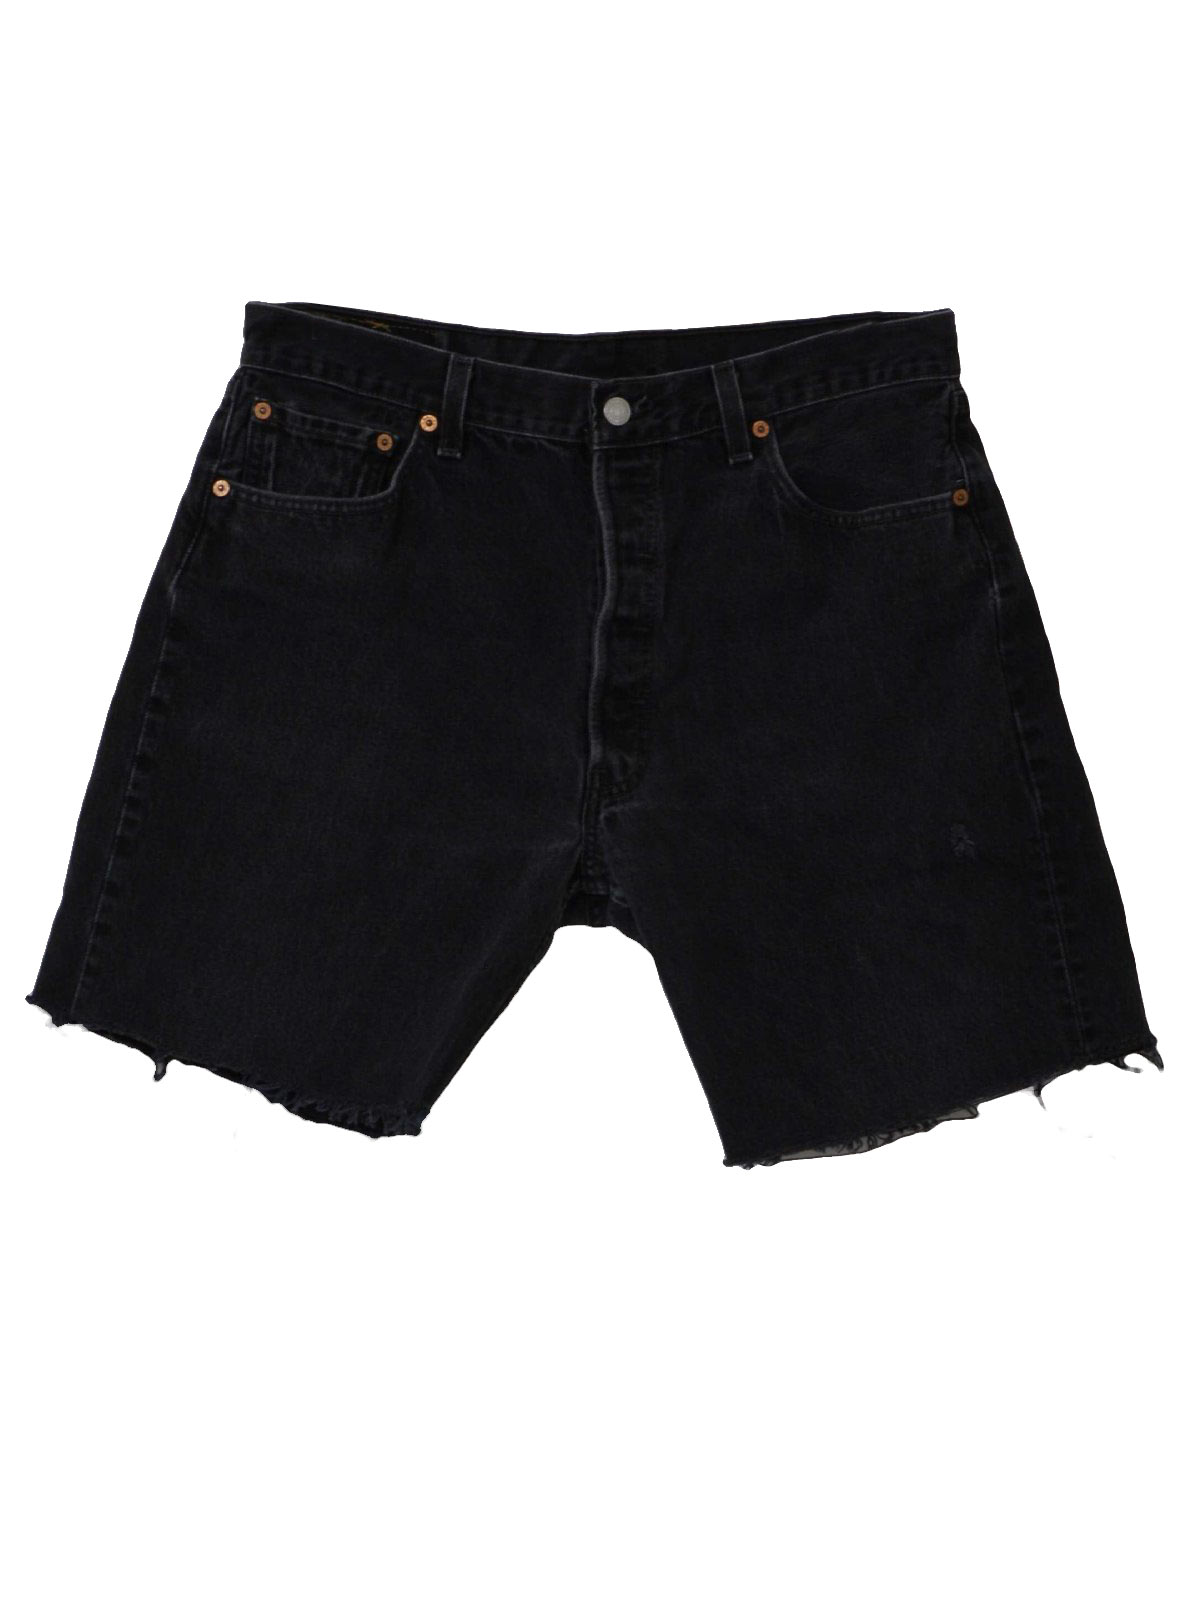 Mens black denim jean shorts – Your new jeans photo blog